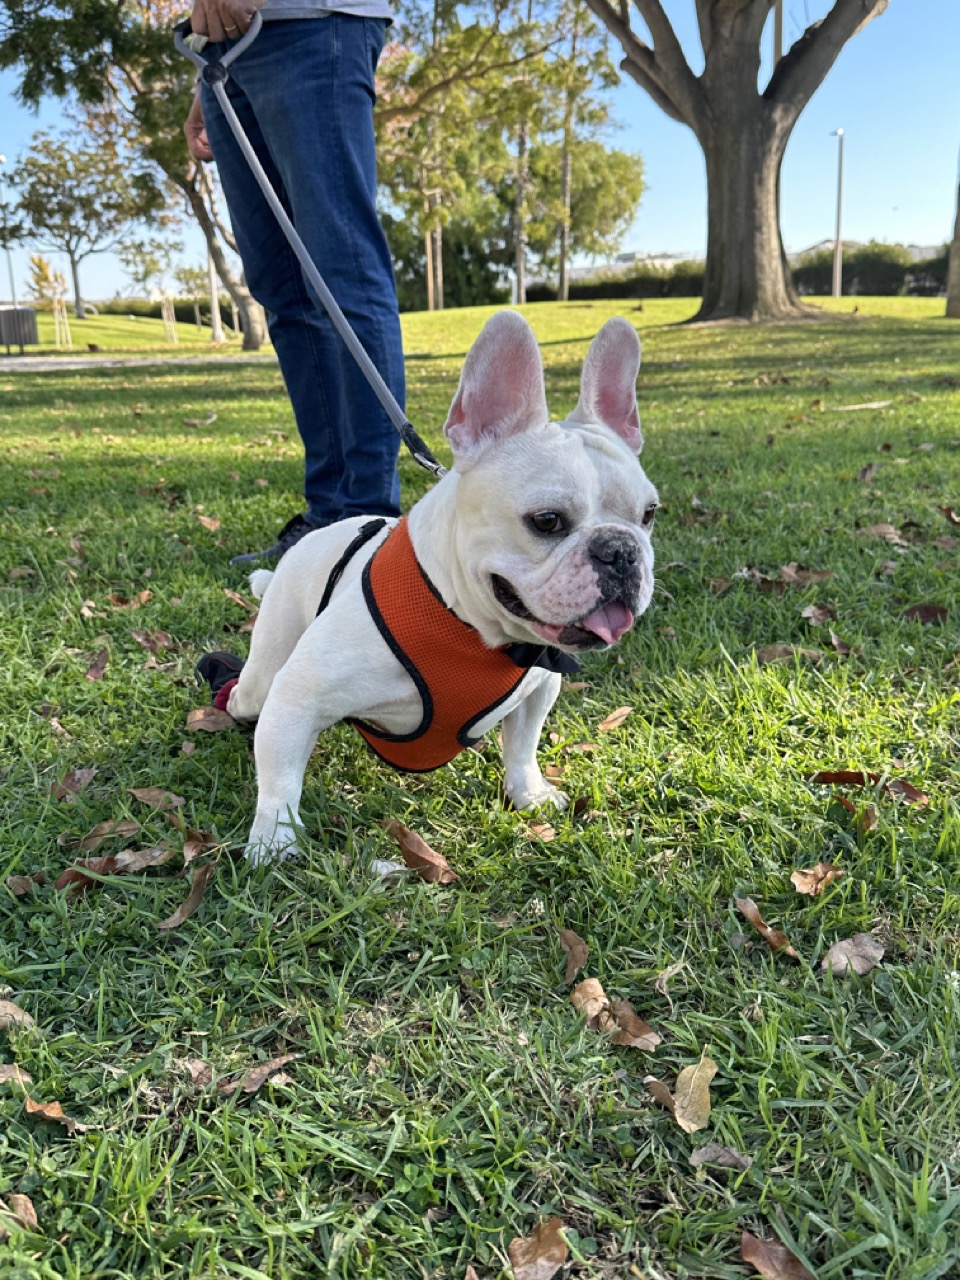 Winston on the grass